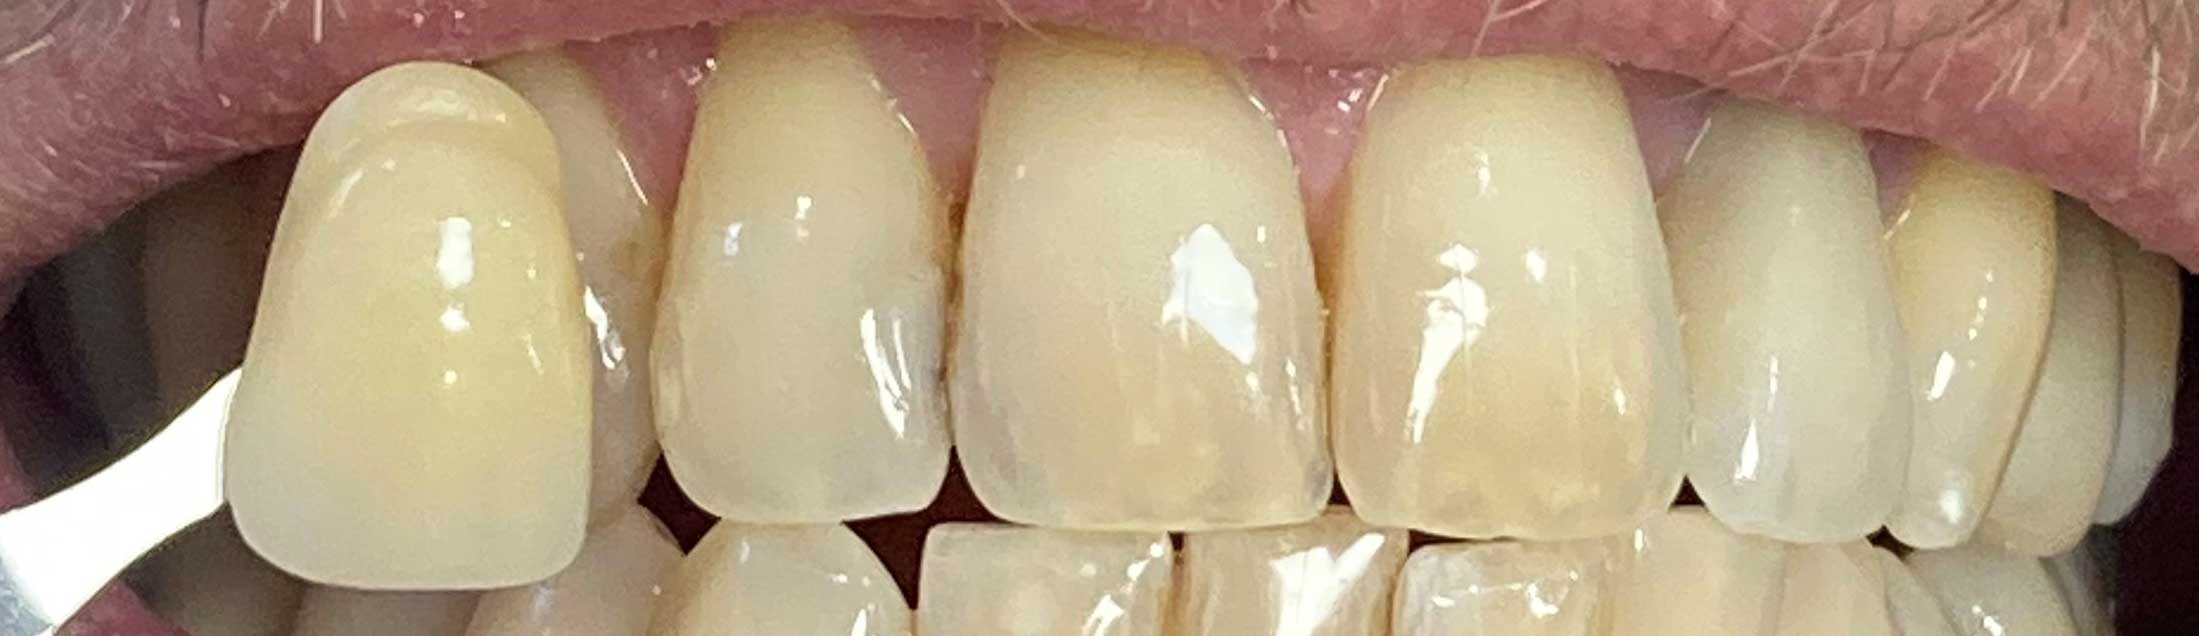 teeth whitening before treatment